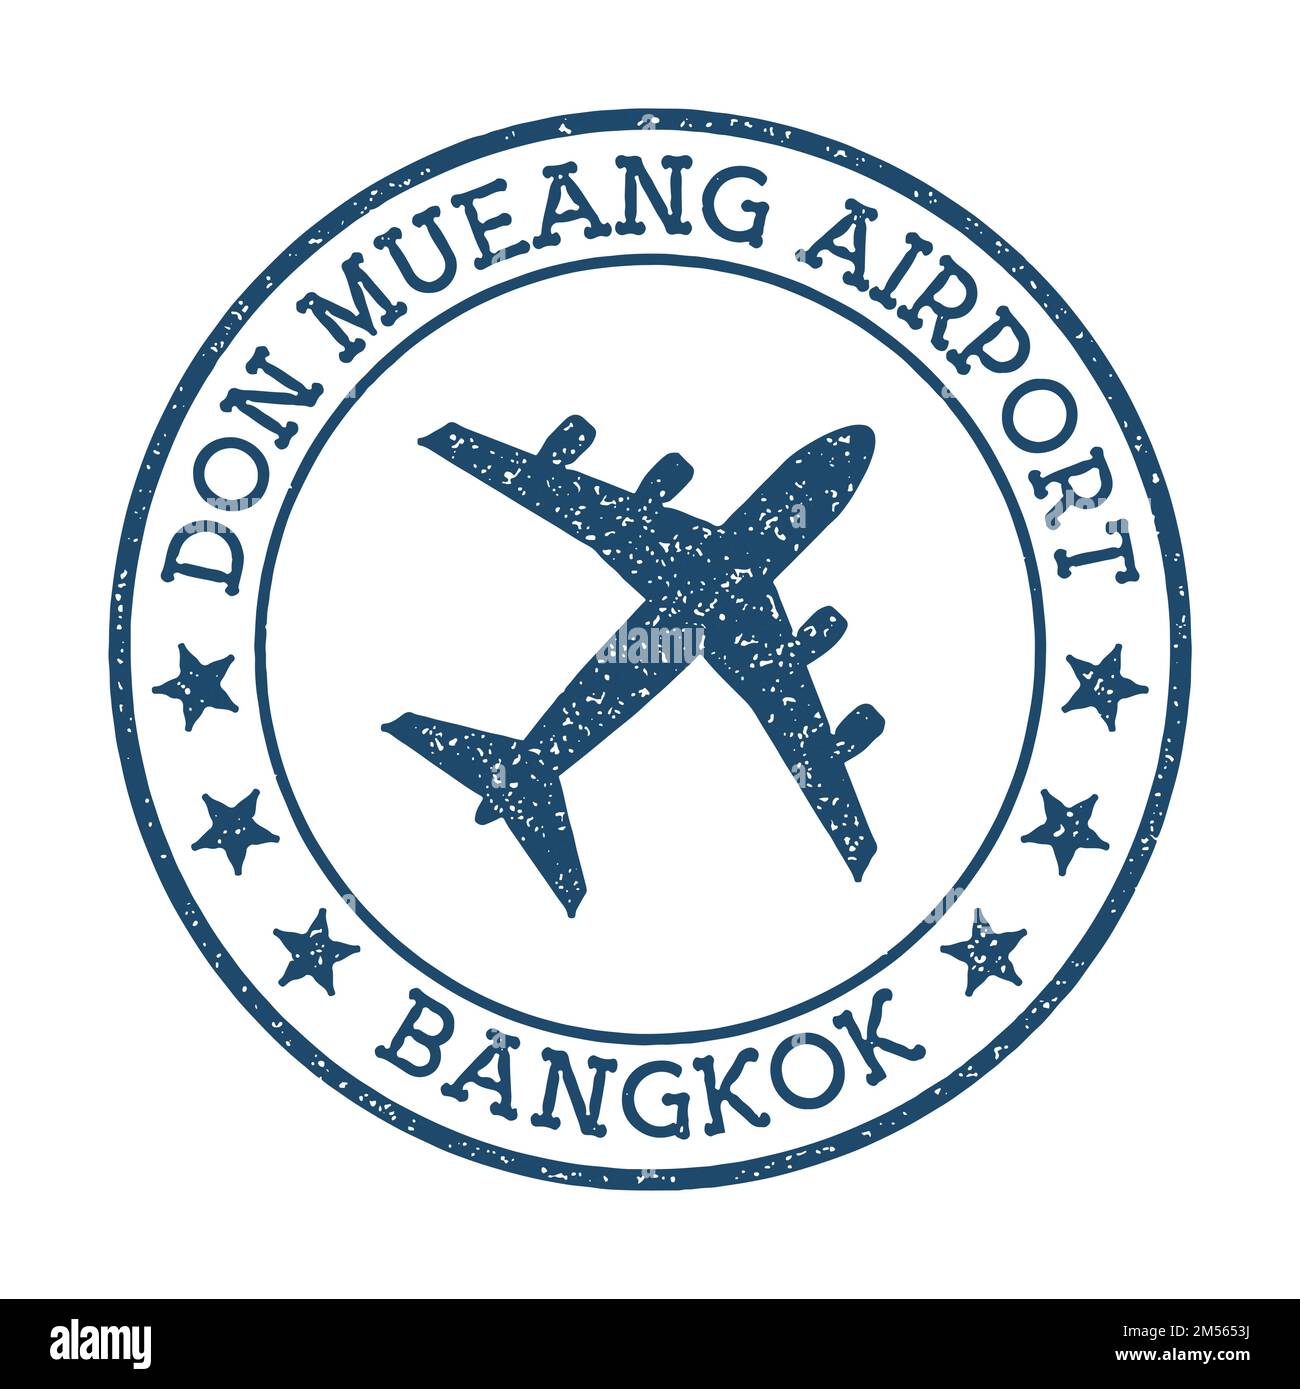 Don Mueang Airport Bangkok logo. Airport stamp vector illustration. Bangkok aerodrome. Stock Vector